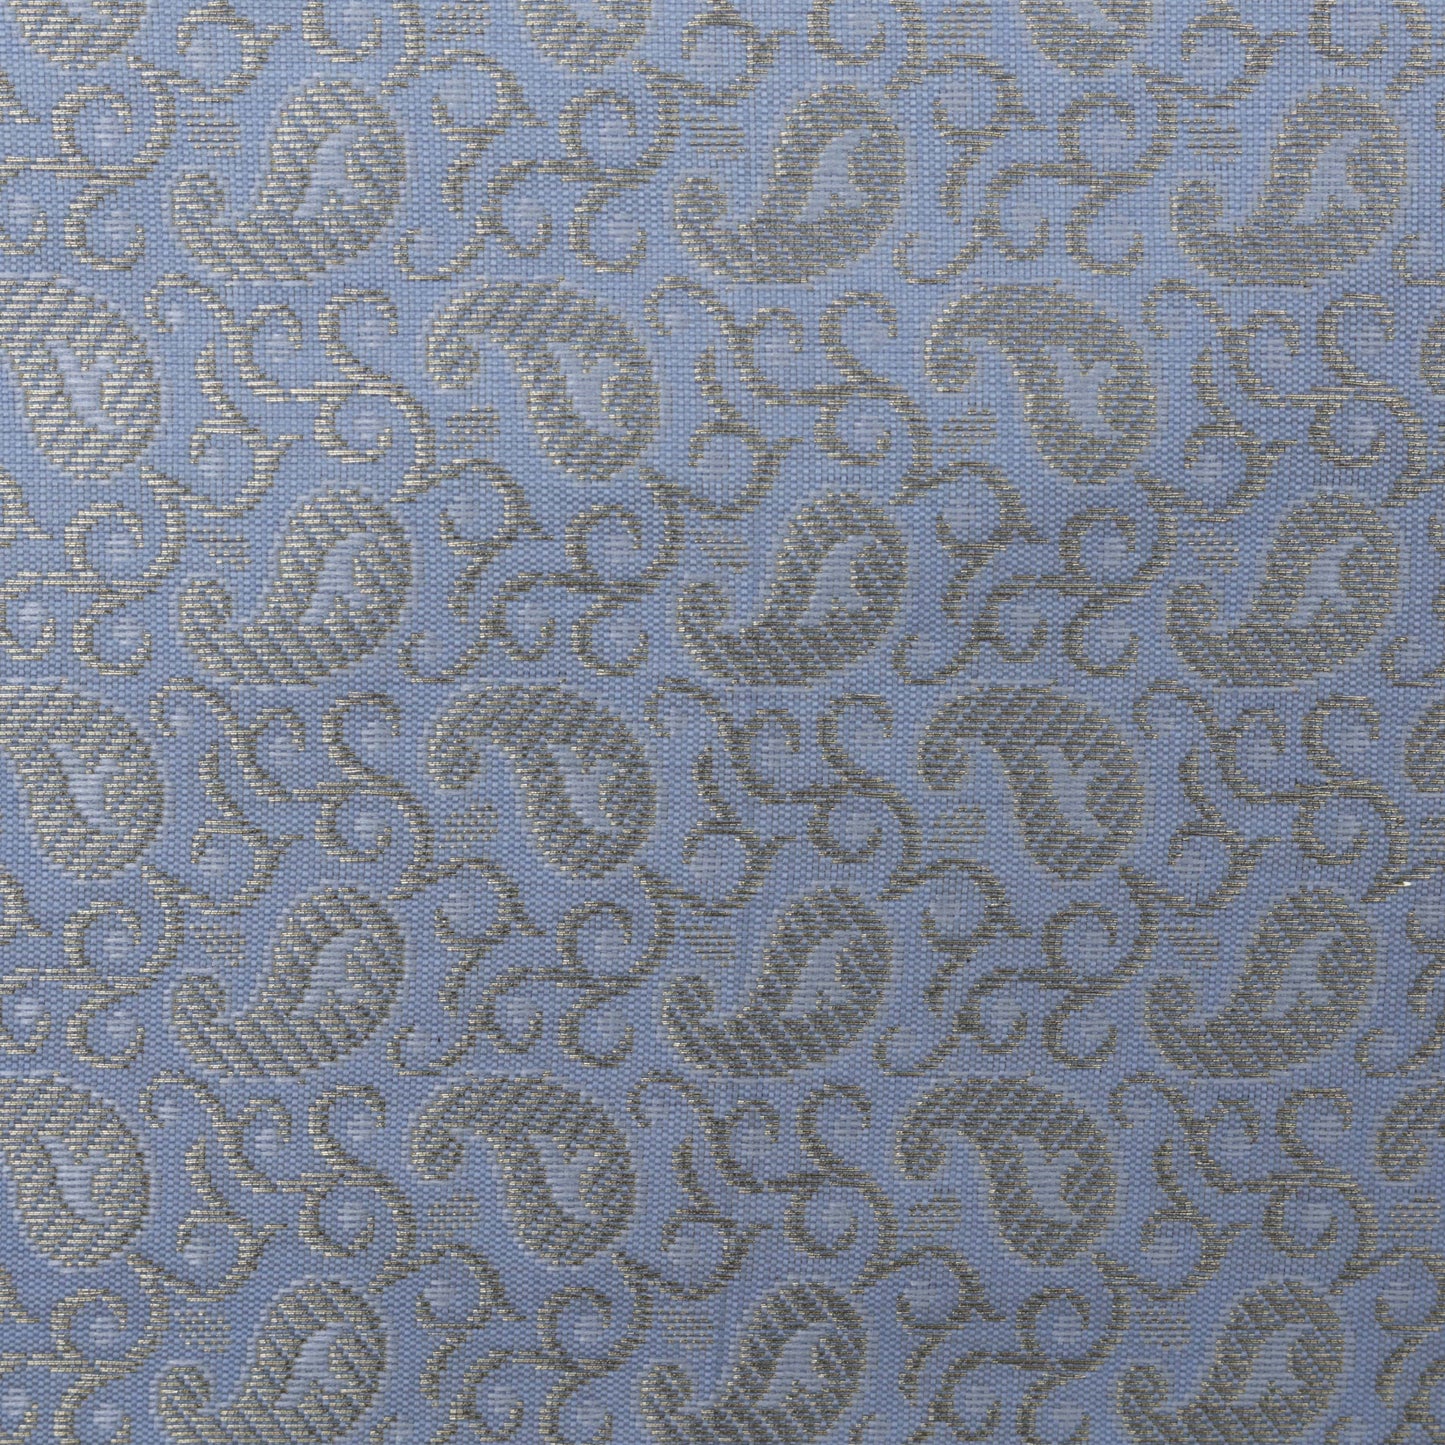 Sky Blue Color Alfi Brocade Fabric